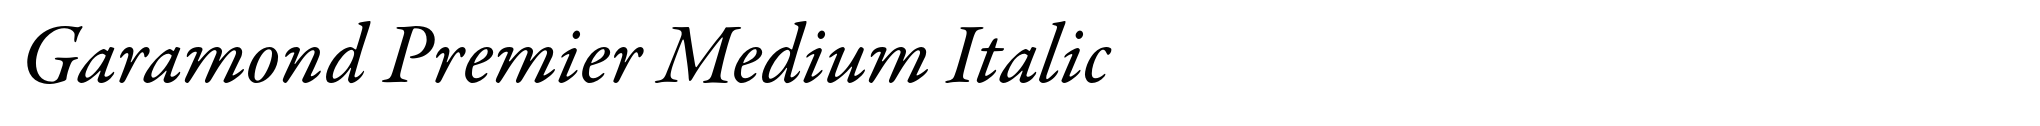 Garamond Premier Medium Italic image